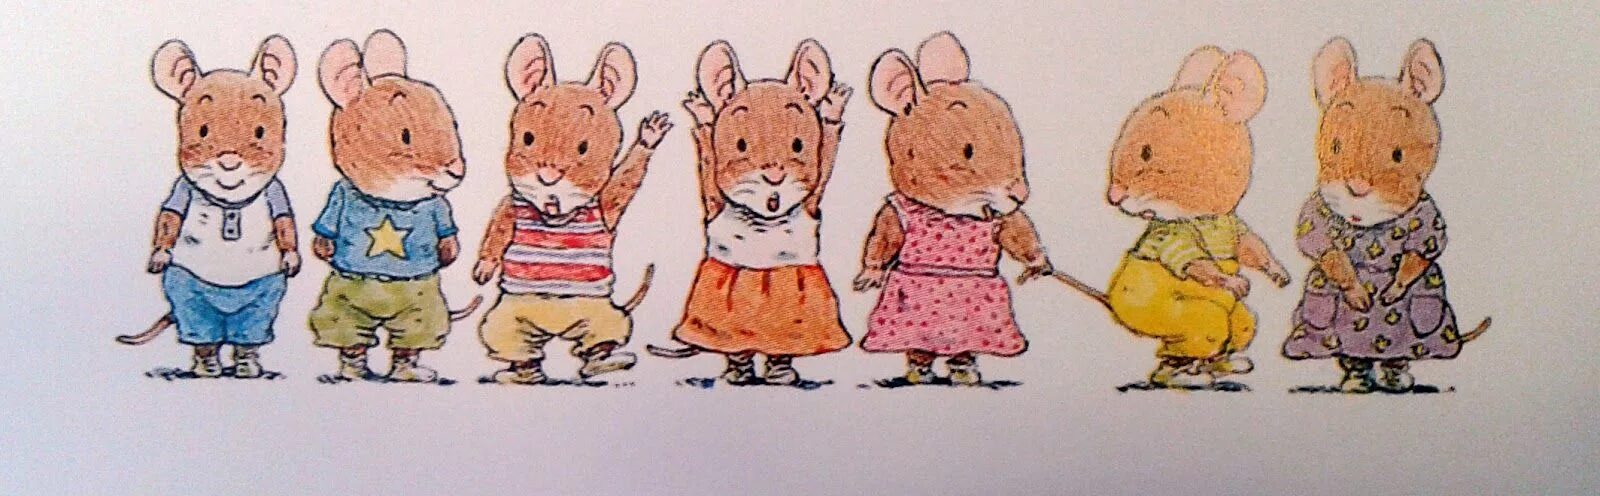 Пять мышей. Семья мышат. Семь мышат. Семья мышат иллюстрация. Семеро мышат.